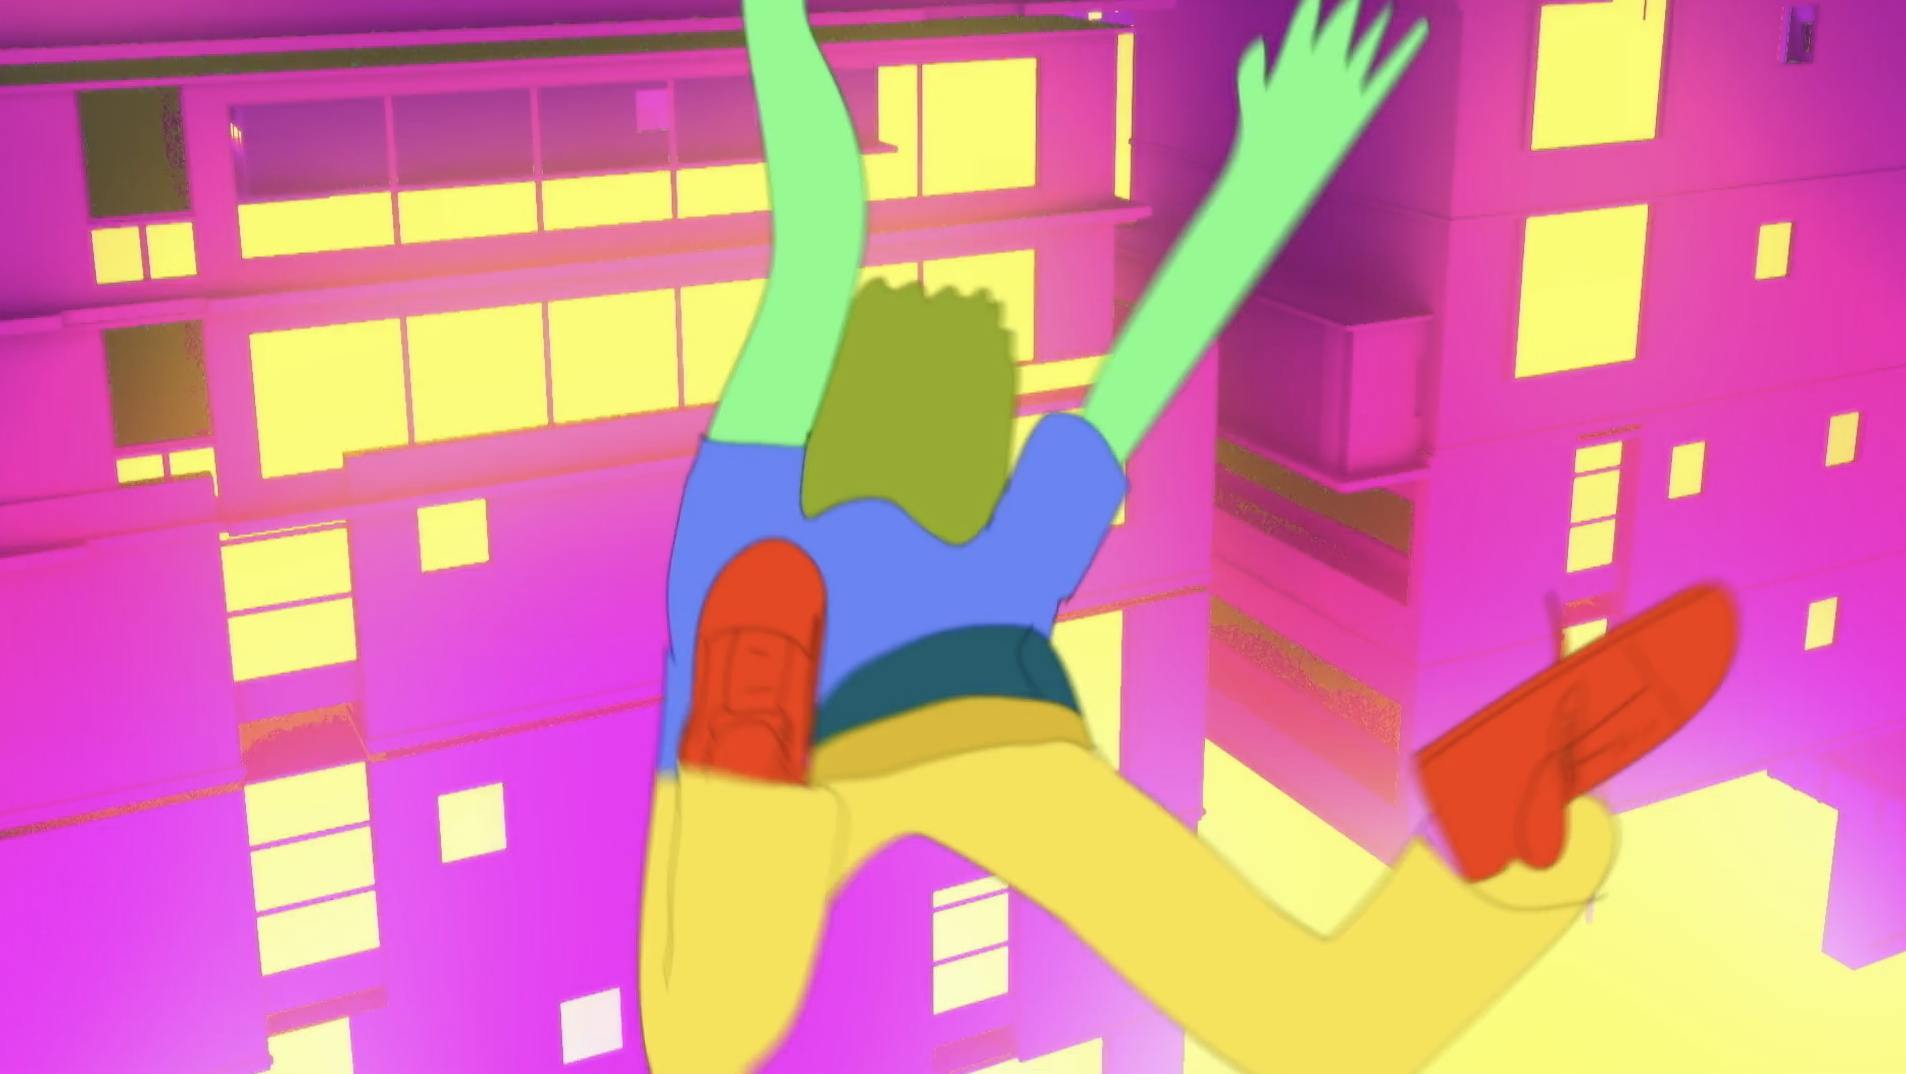 A green-skinned person flails their limbs while falling through the air